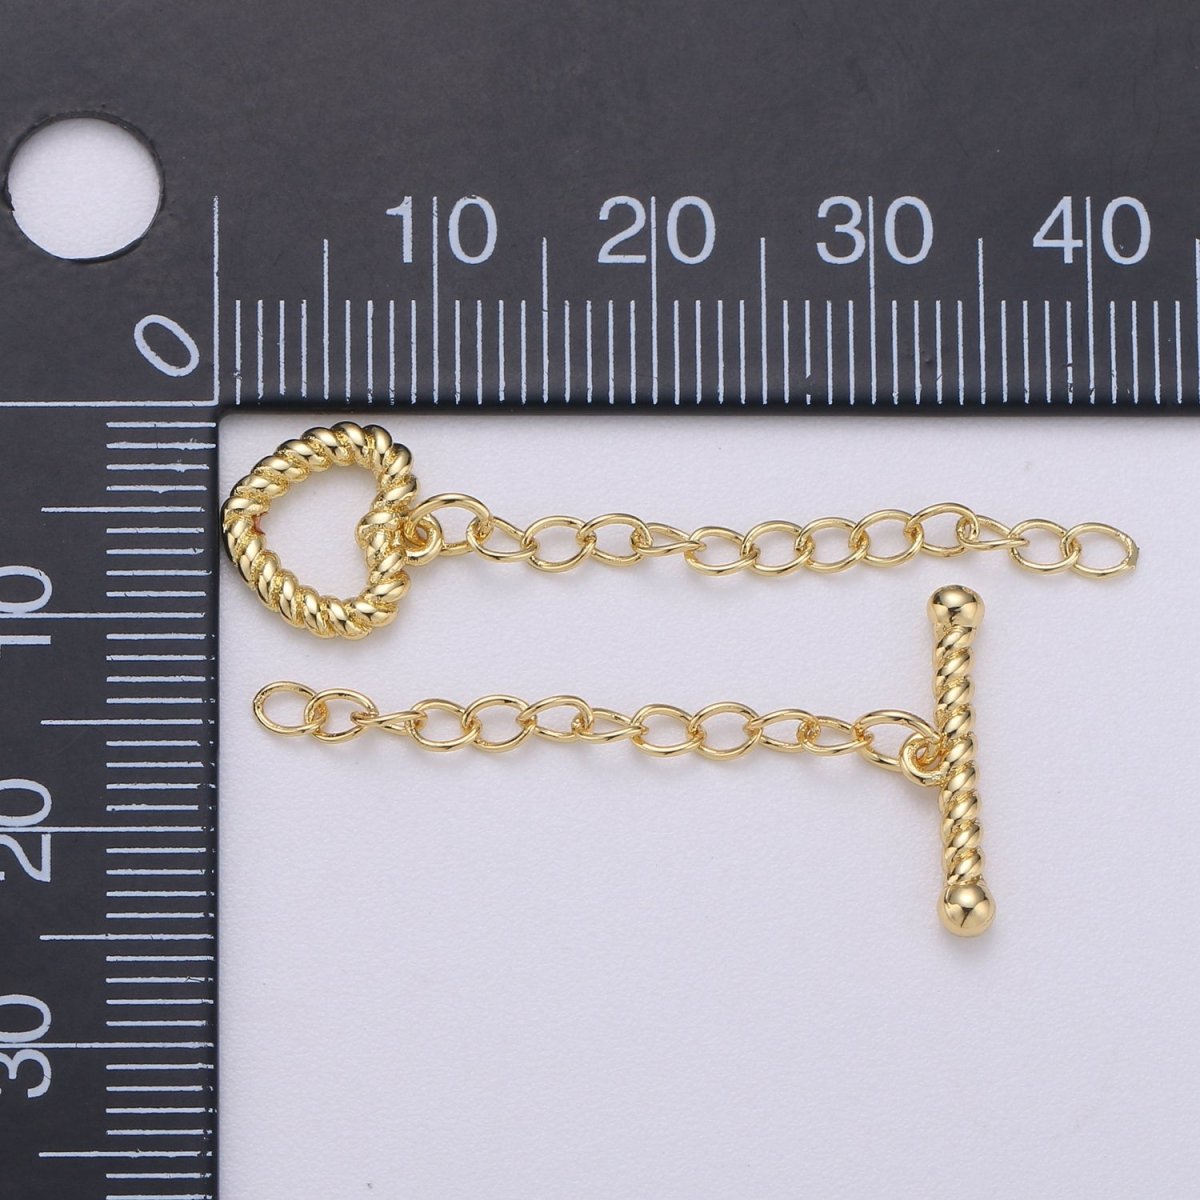 14k Gold Filled heart shape clasp toggle, Twisted Gold clasp, gold heart clasp toggle, heart toggle for Necklace Bracelet Component K-896 - DLUXCA